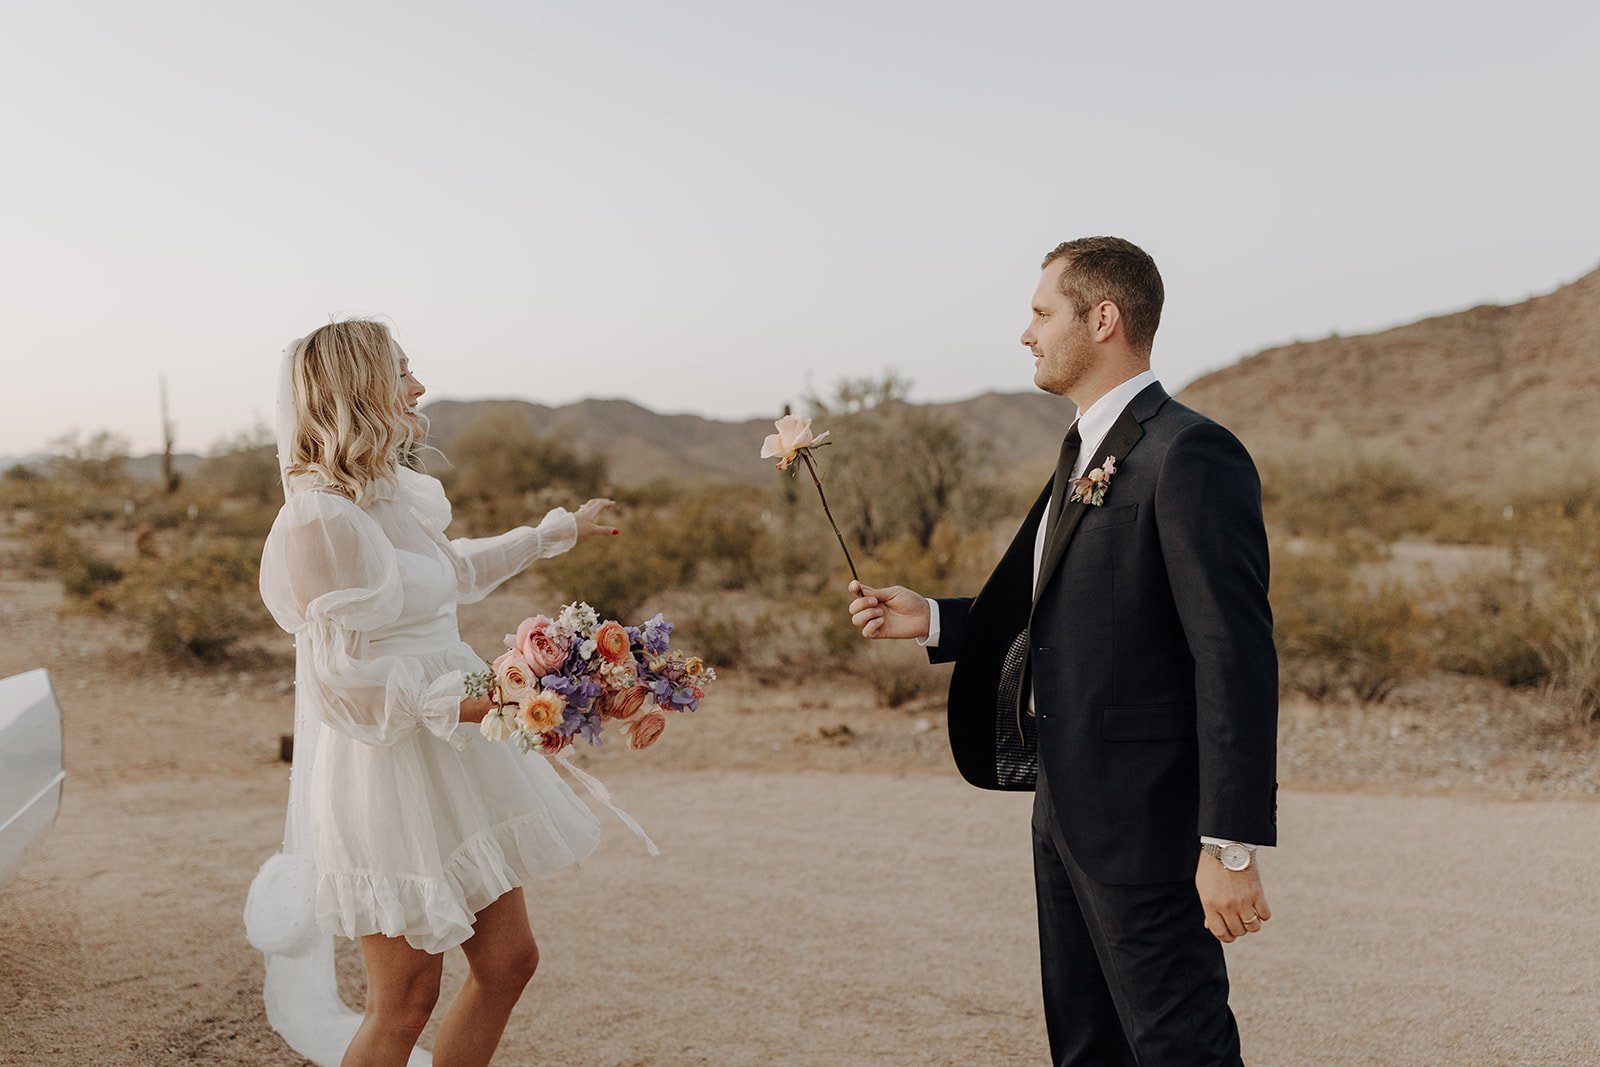 Groom handing bride a pink rose during wedding styled shoot